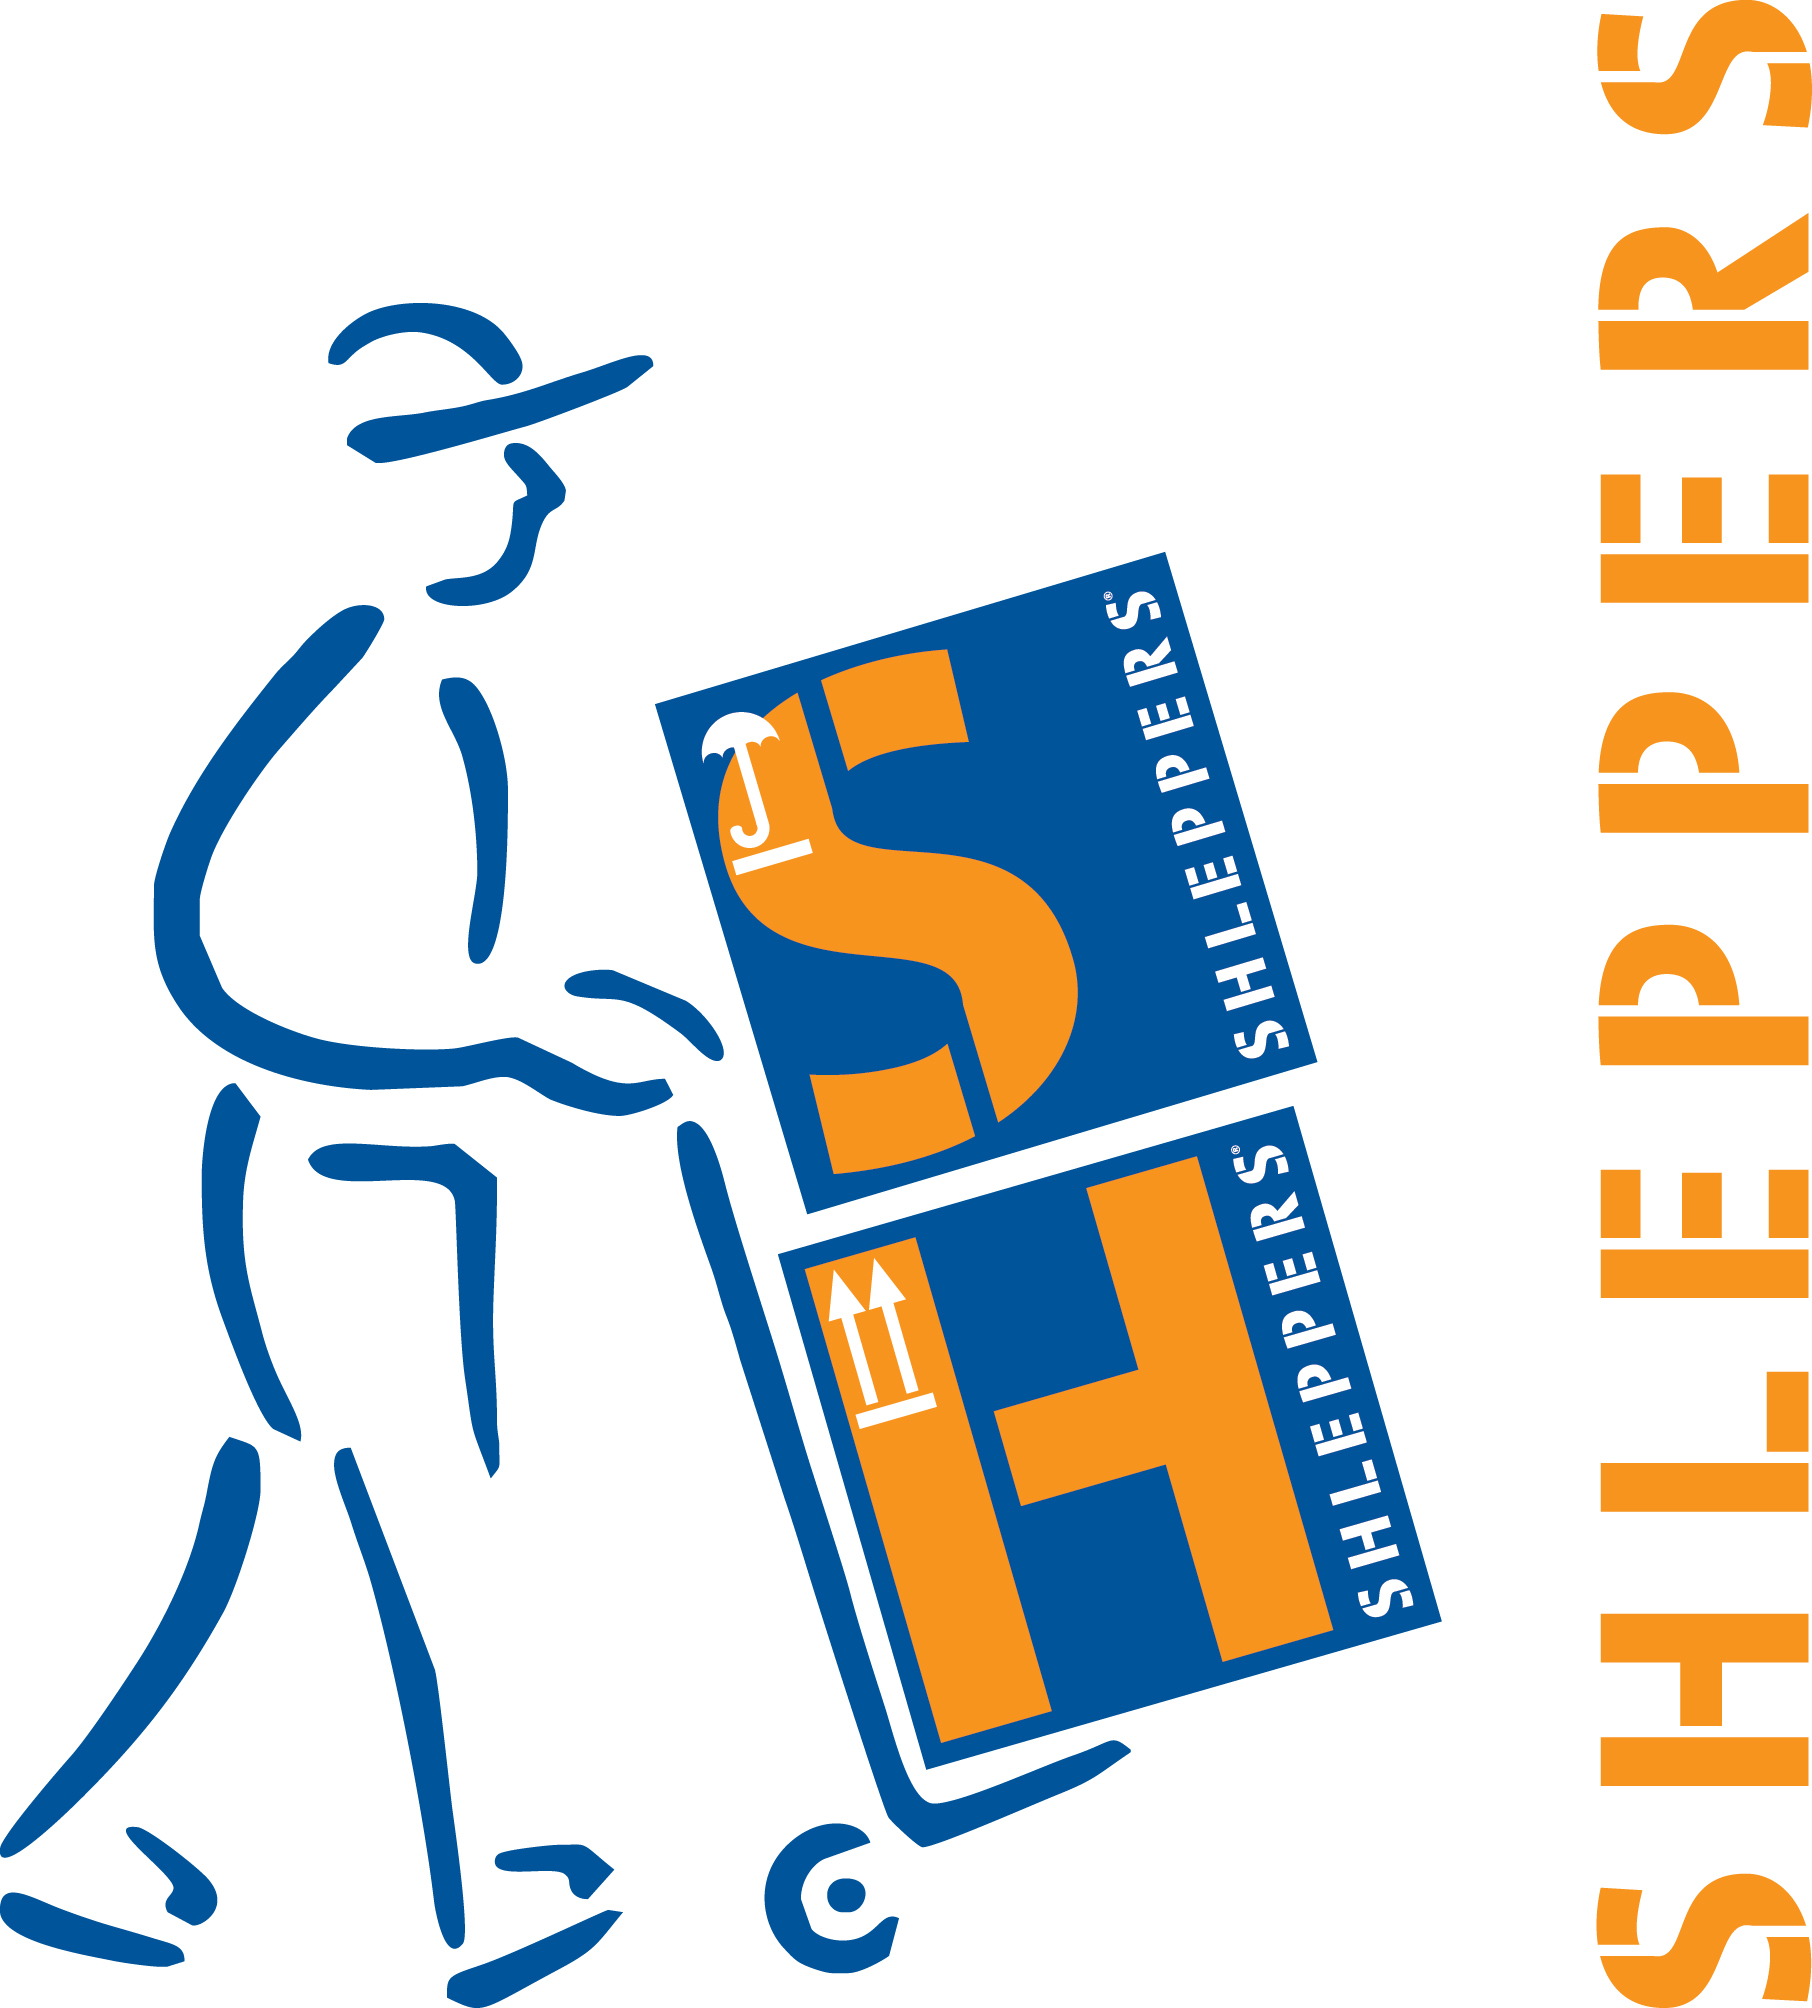 Shleppers Moving & Storage Logo